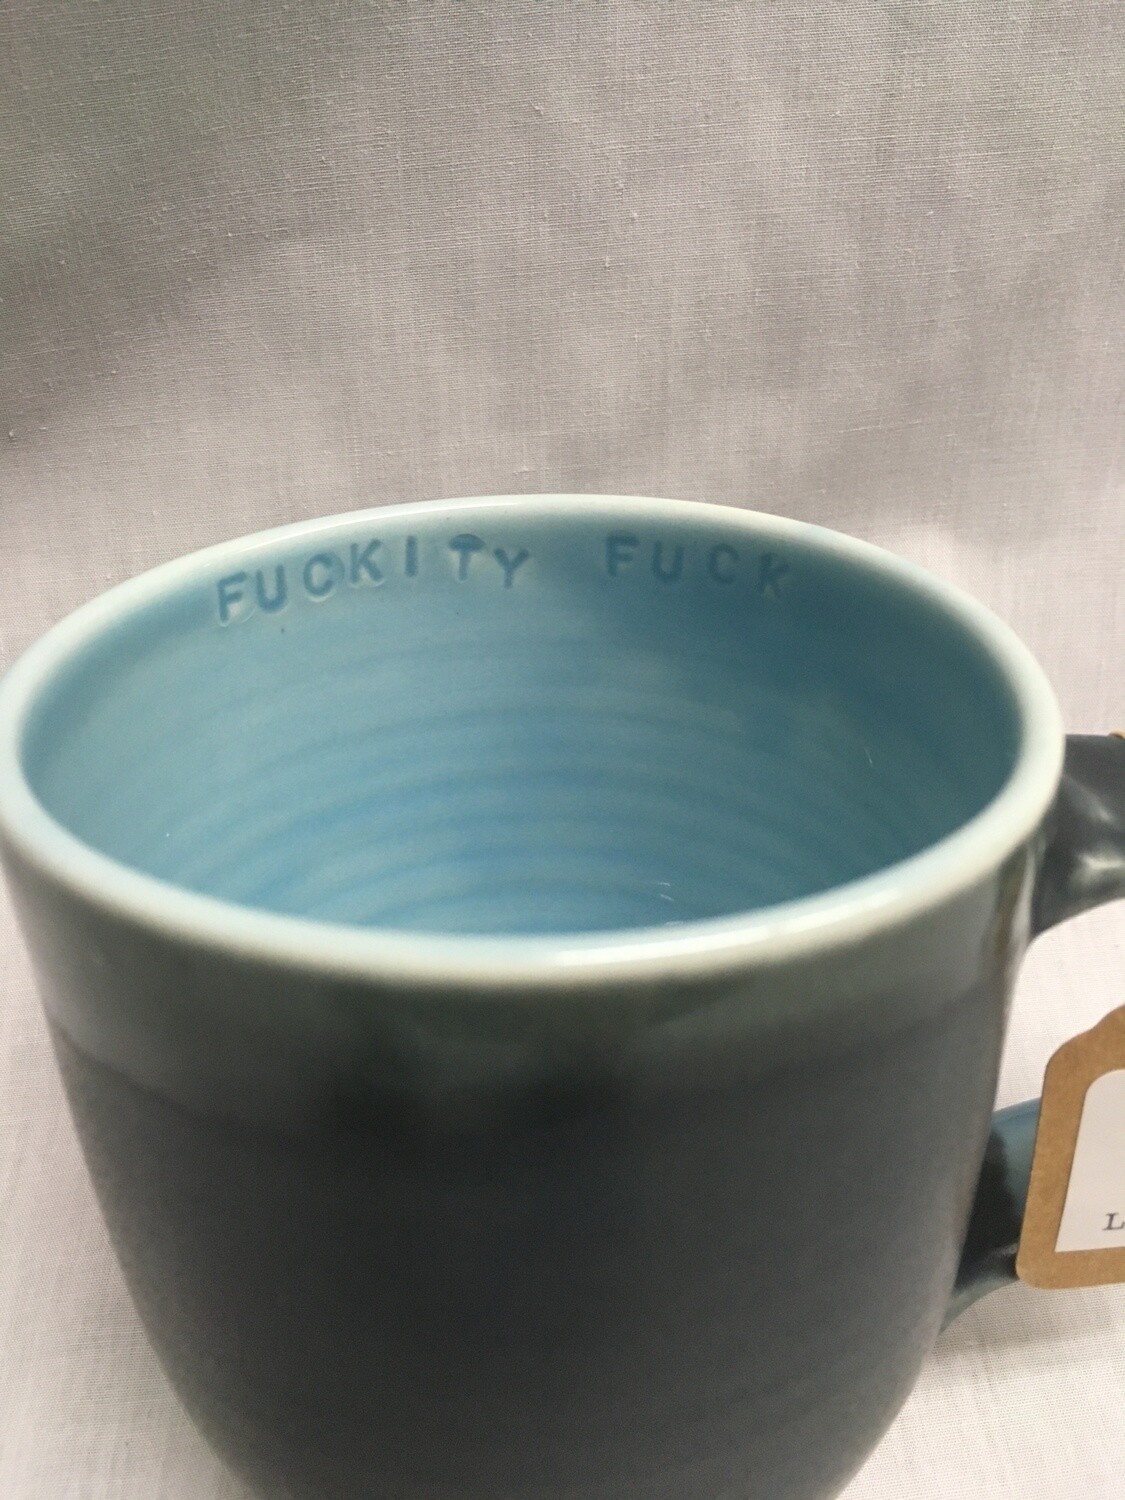 Sassy Mug - With inside mug Inscription - F#@kity F#@k